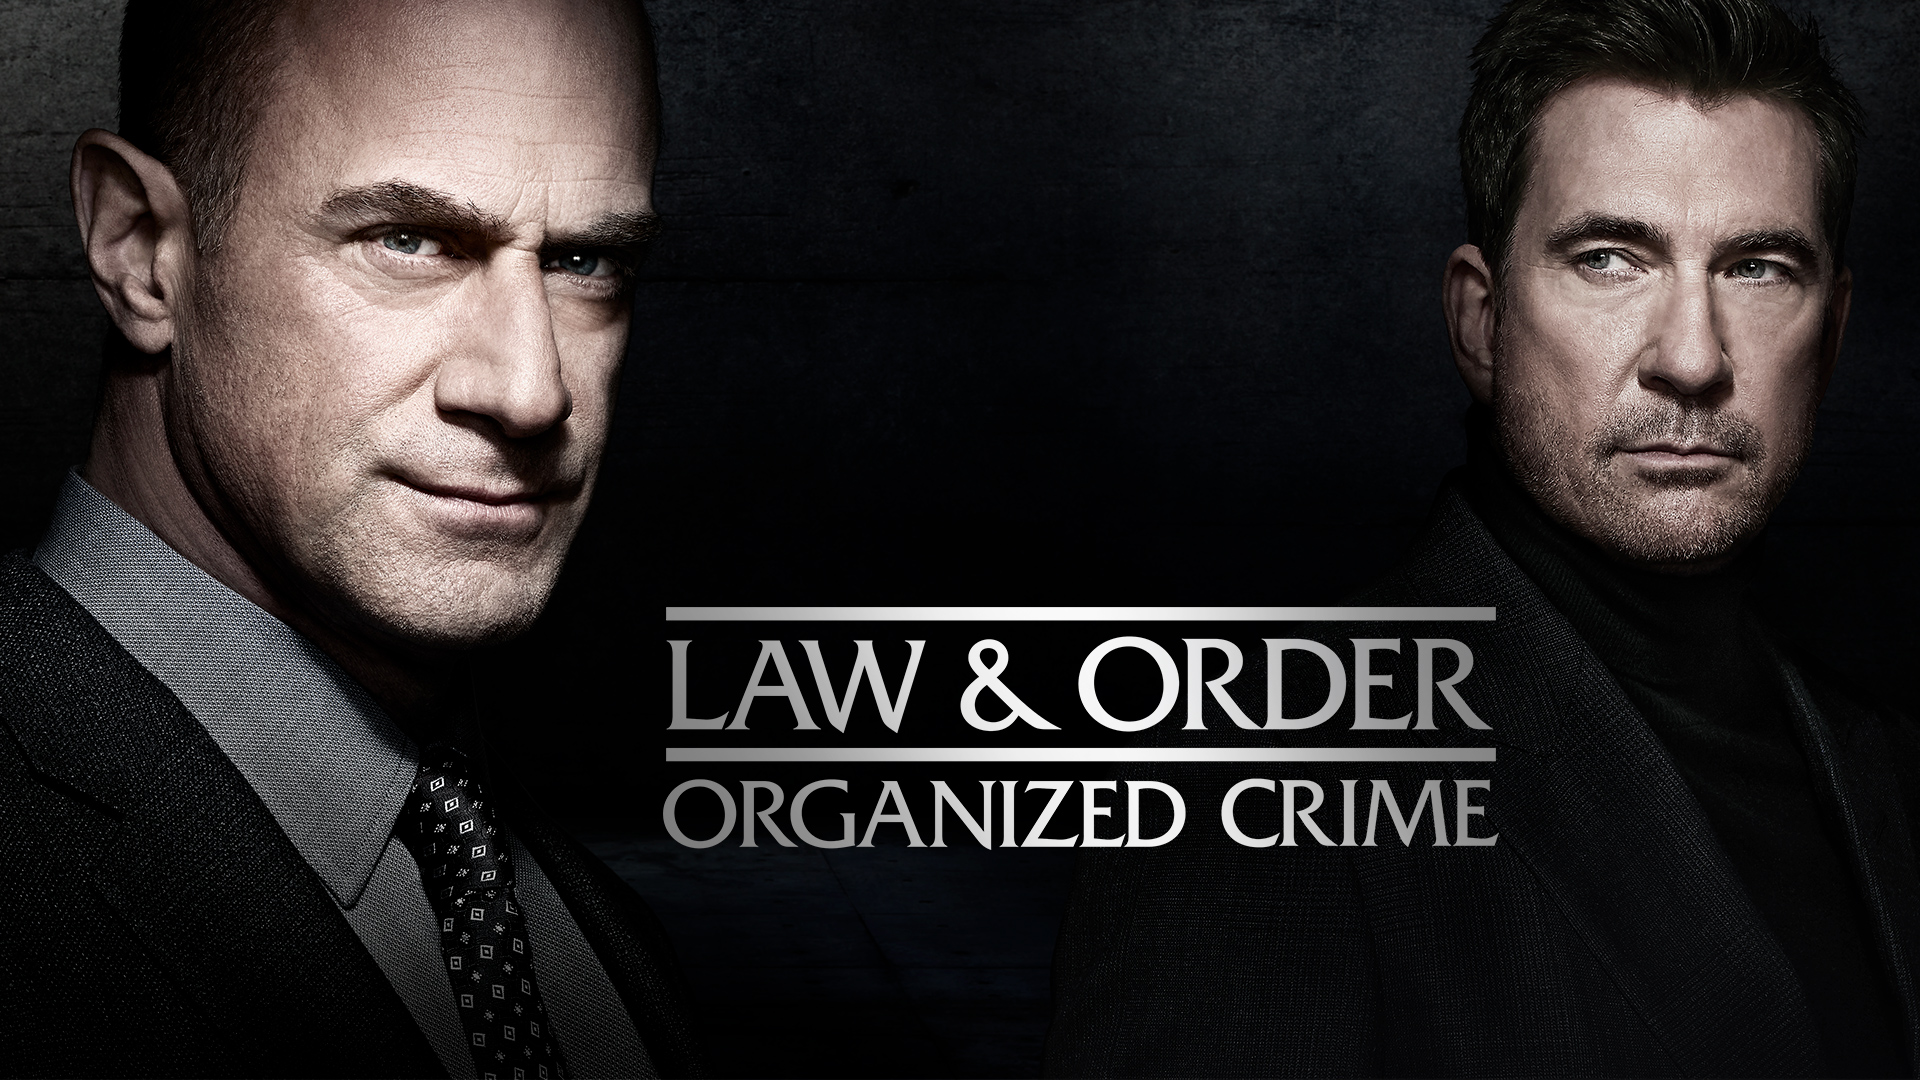 Law & Order Organized Crime Cast